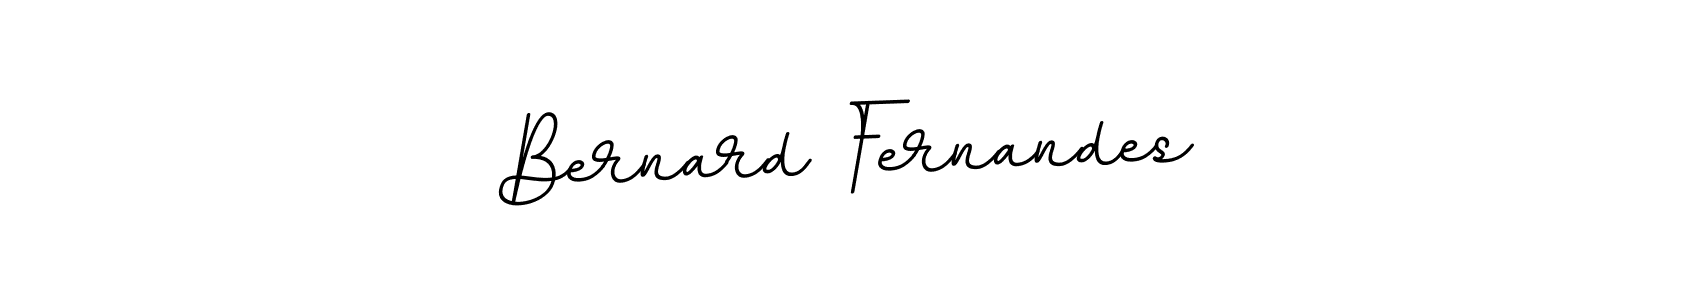 How to Draw Bernard Fernandes signature style? BallpointsItalic-DORy9 is a latest design signature styles for name Bernard Fernandes. Bernard Fernandes signature style 11 images and pictures png